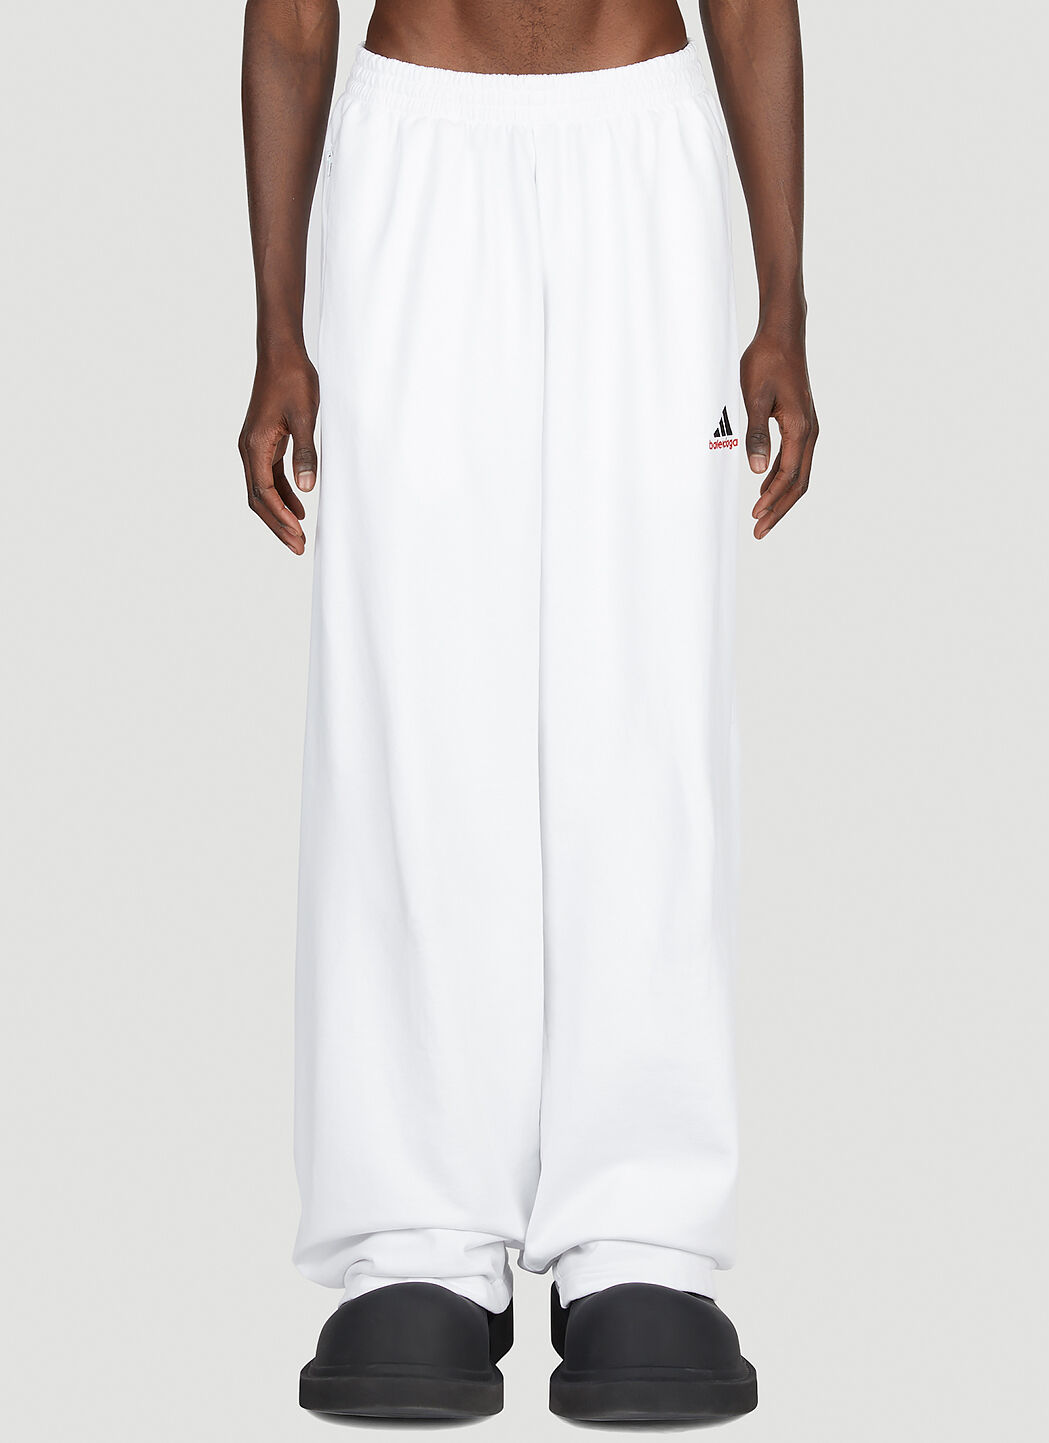 Balenciaga x adidas 刺繡ロゴトラックパンツ ホワイト axb0151027